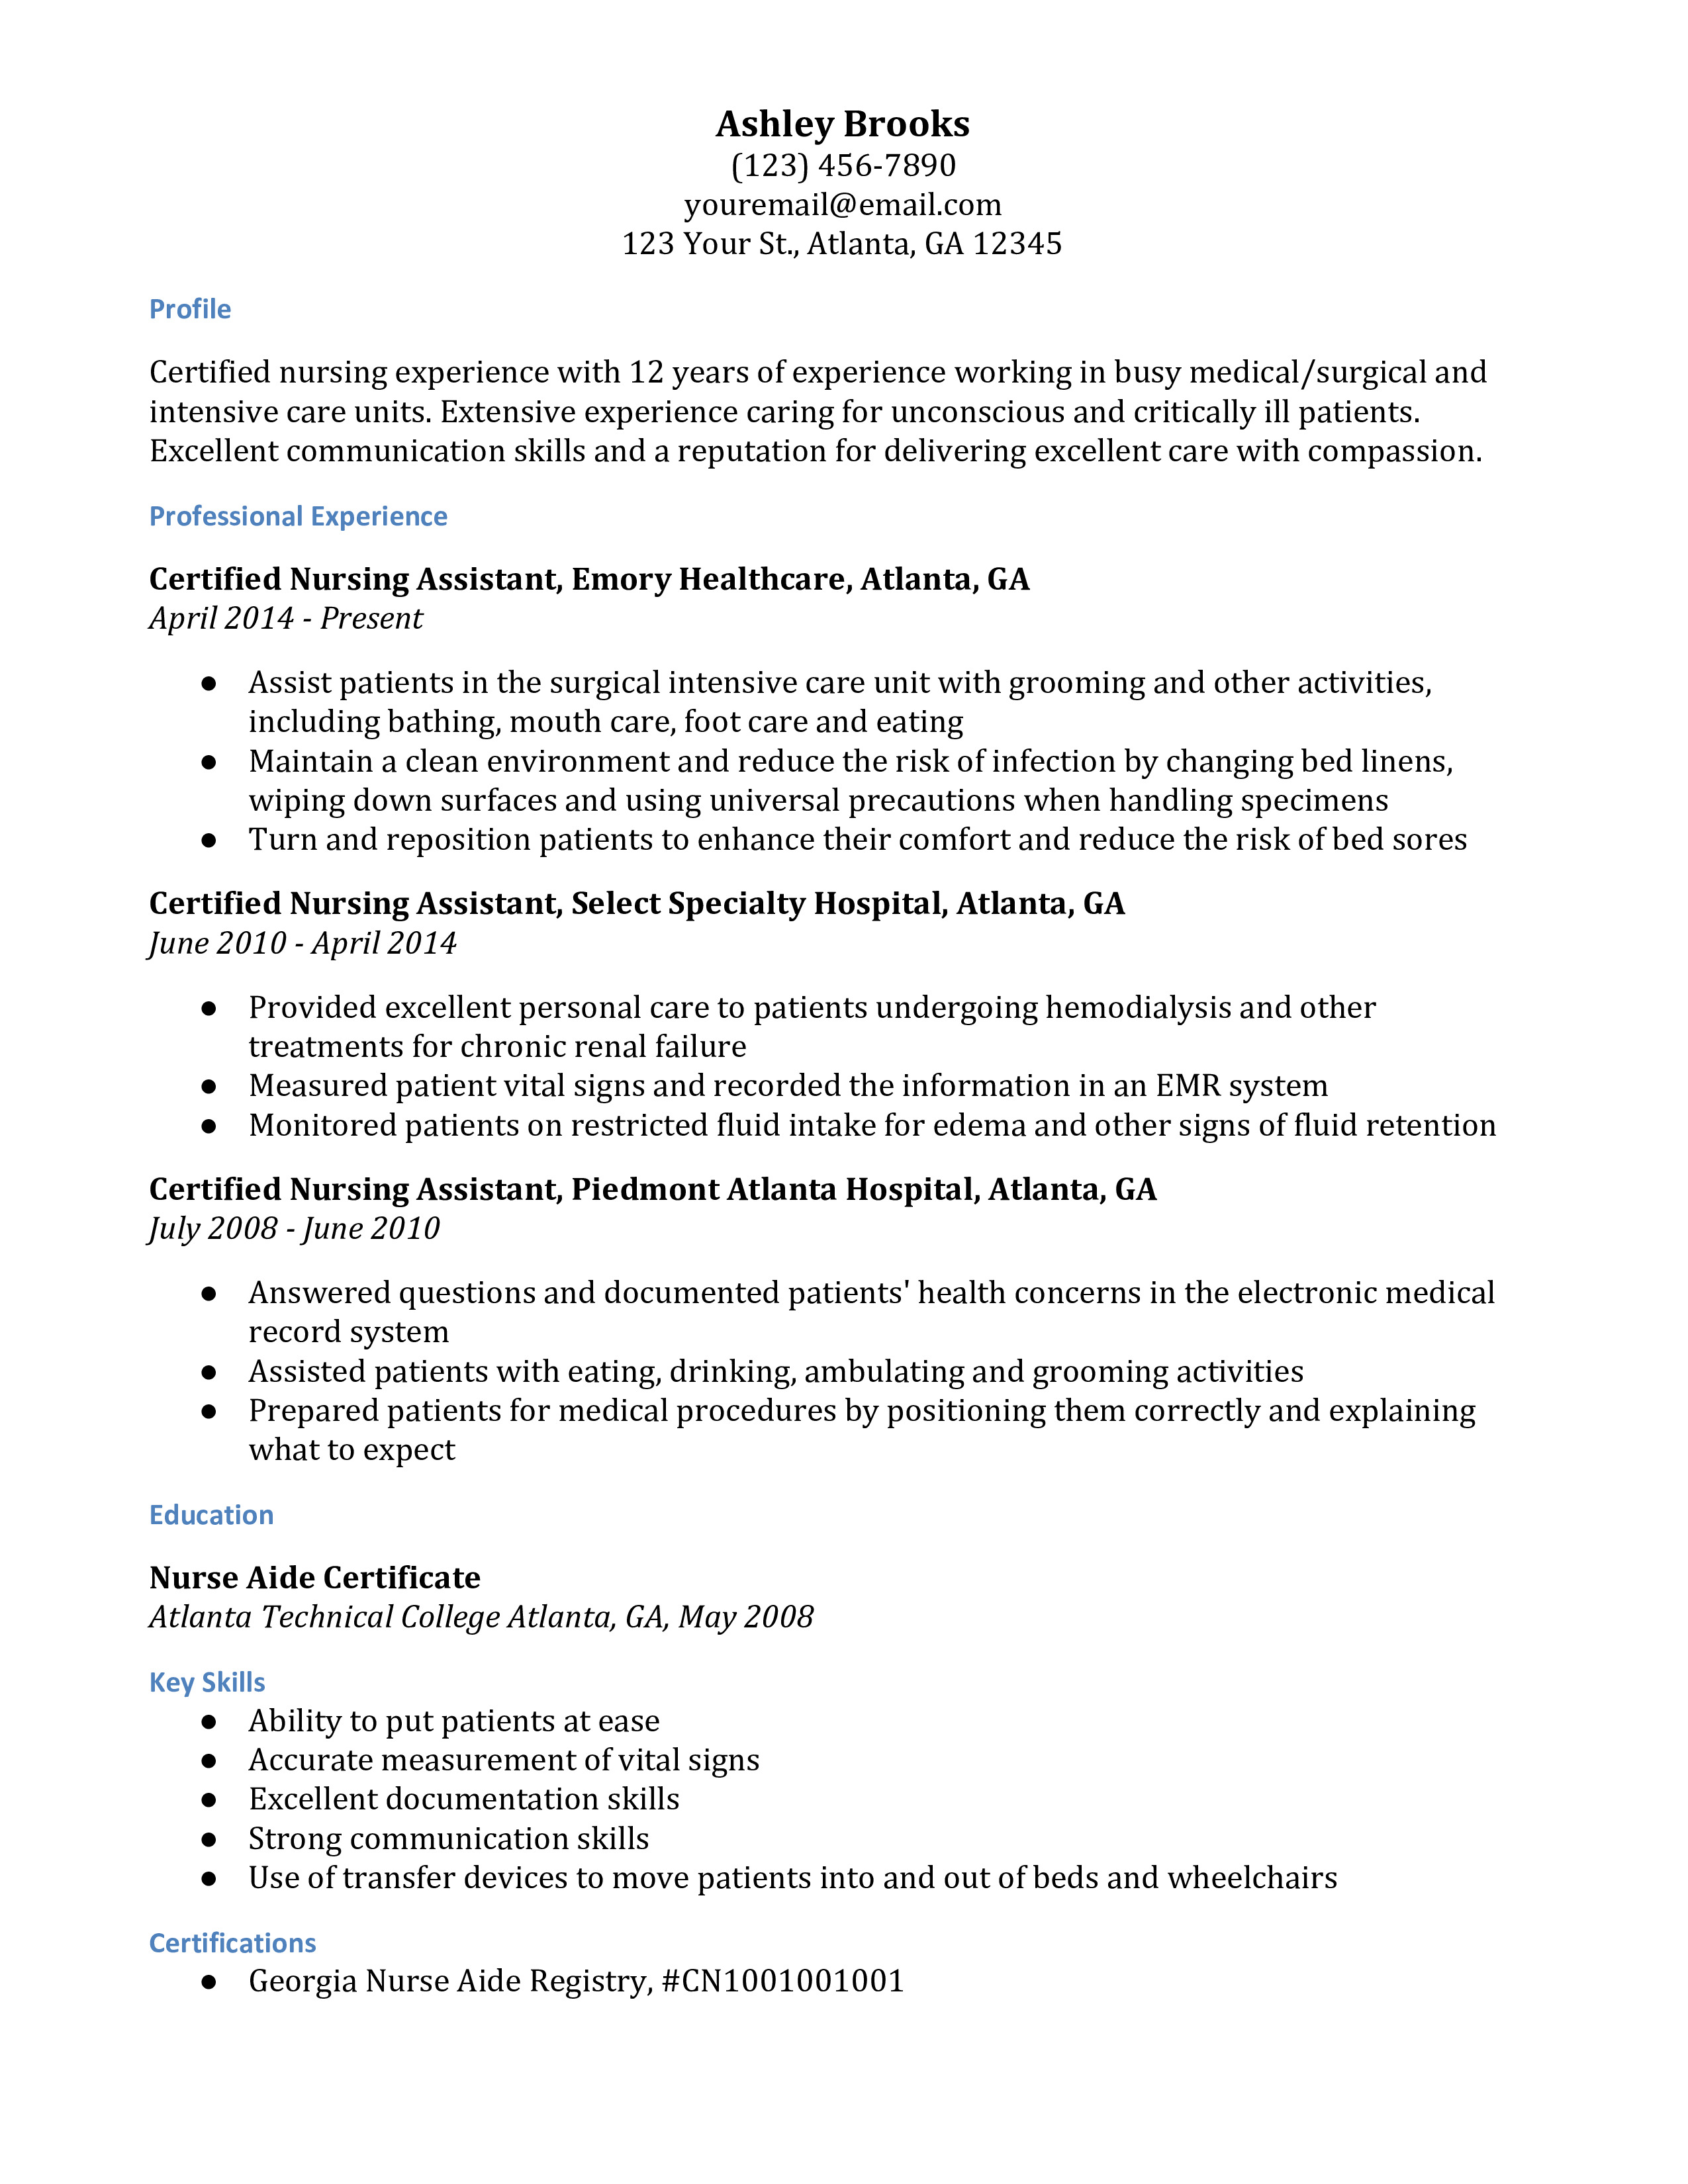 Certified Nursing Assistant Resume Examples Resumebuilder Com